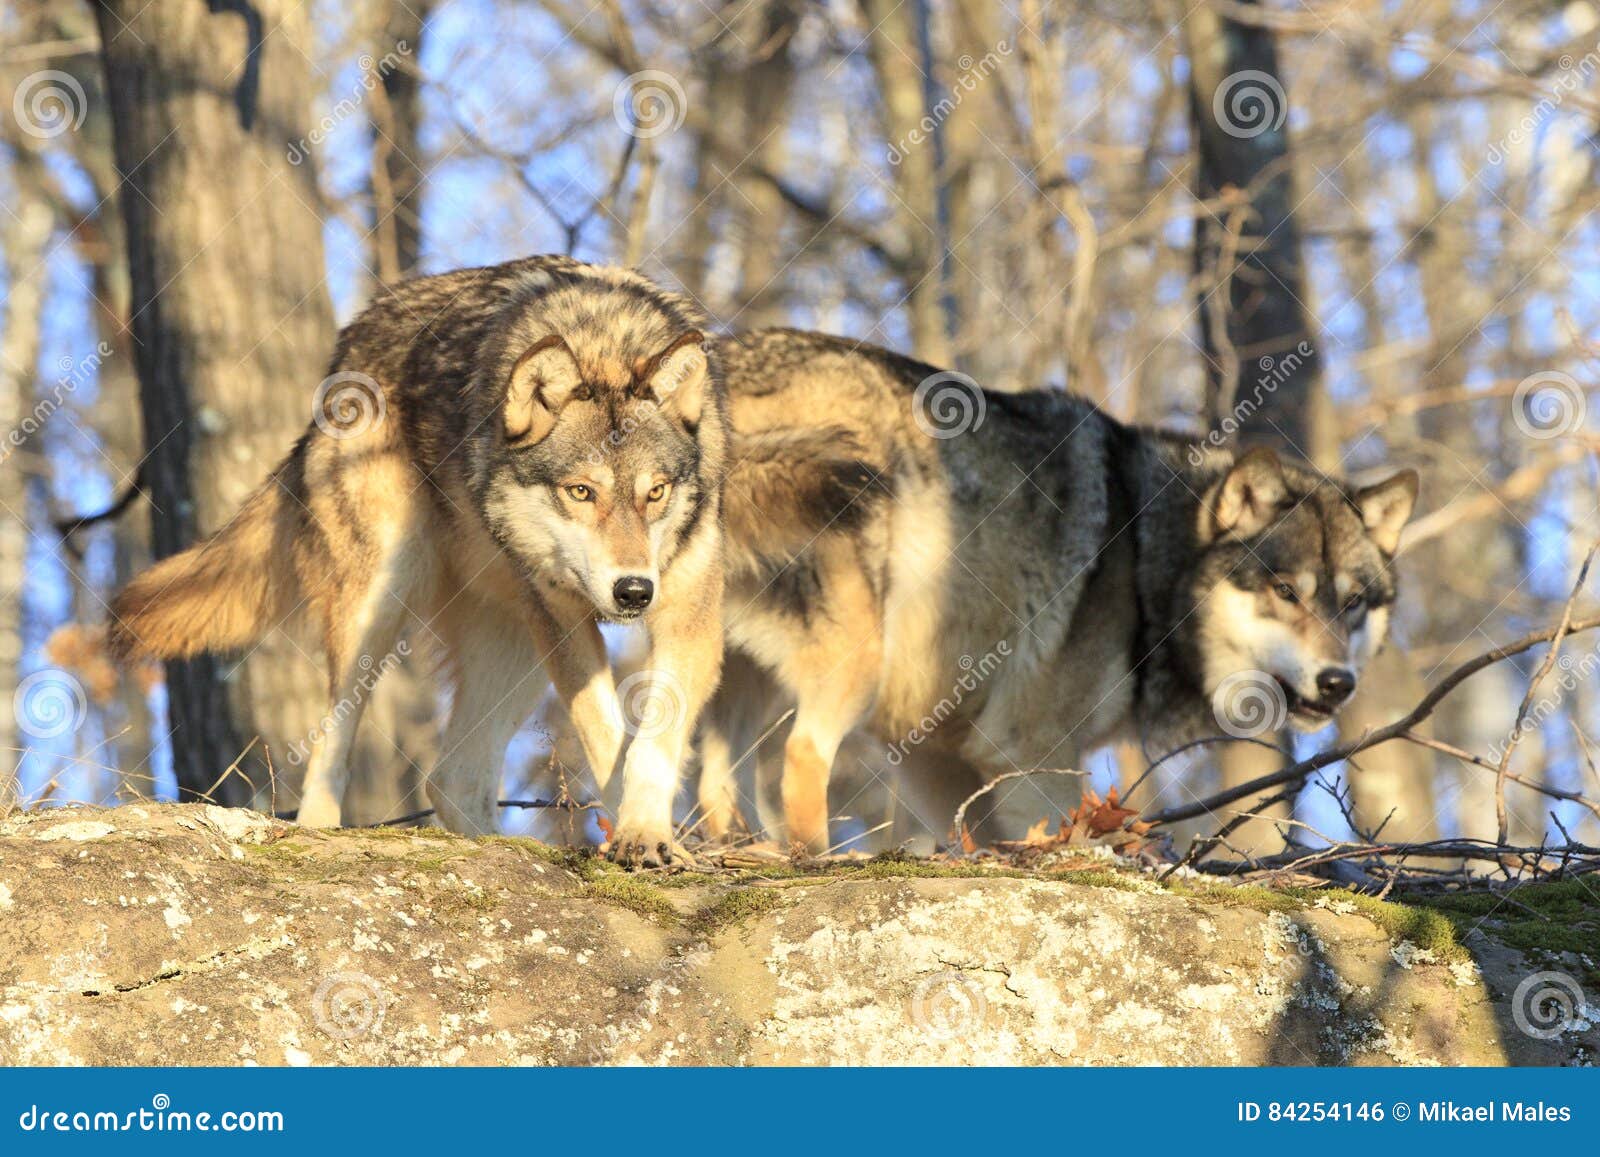 two wolves stalking towards kill